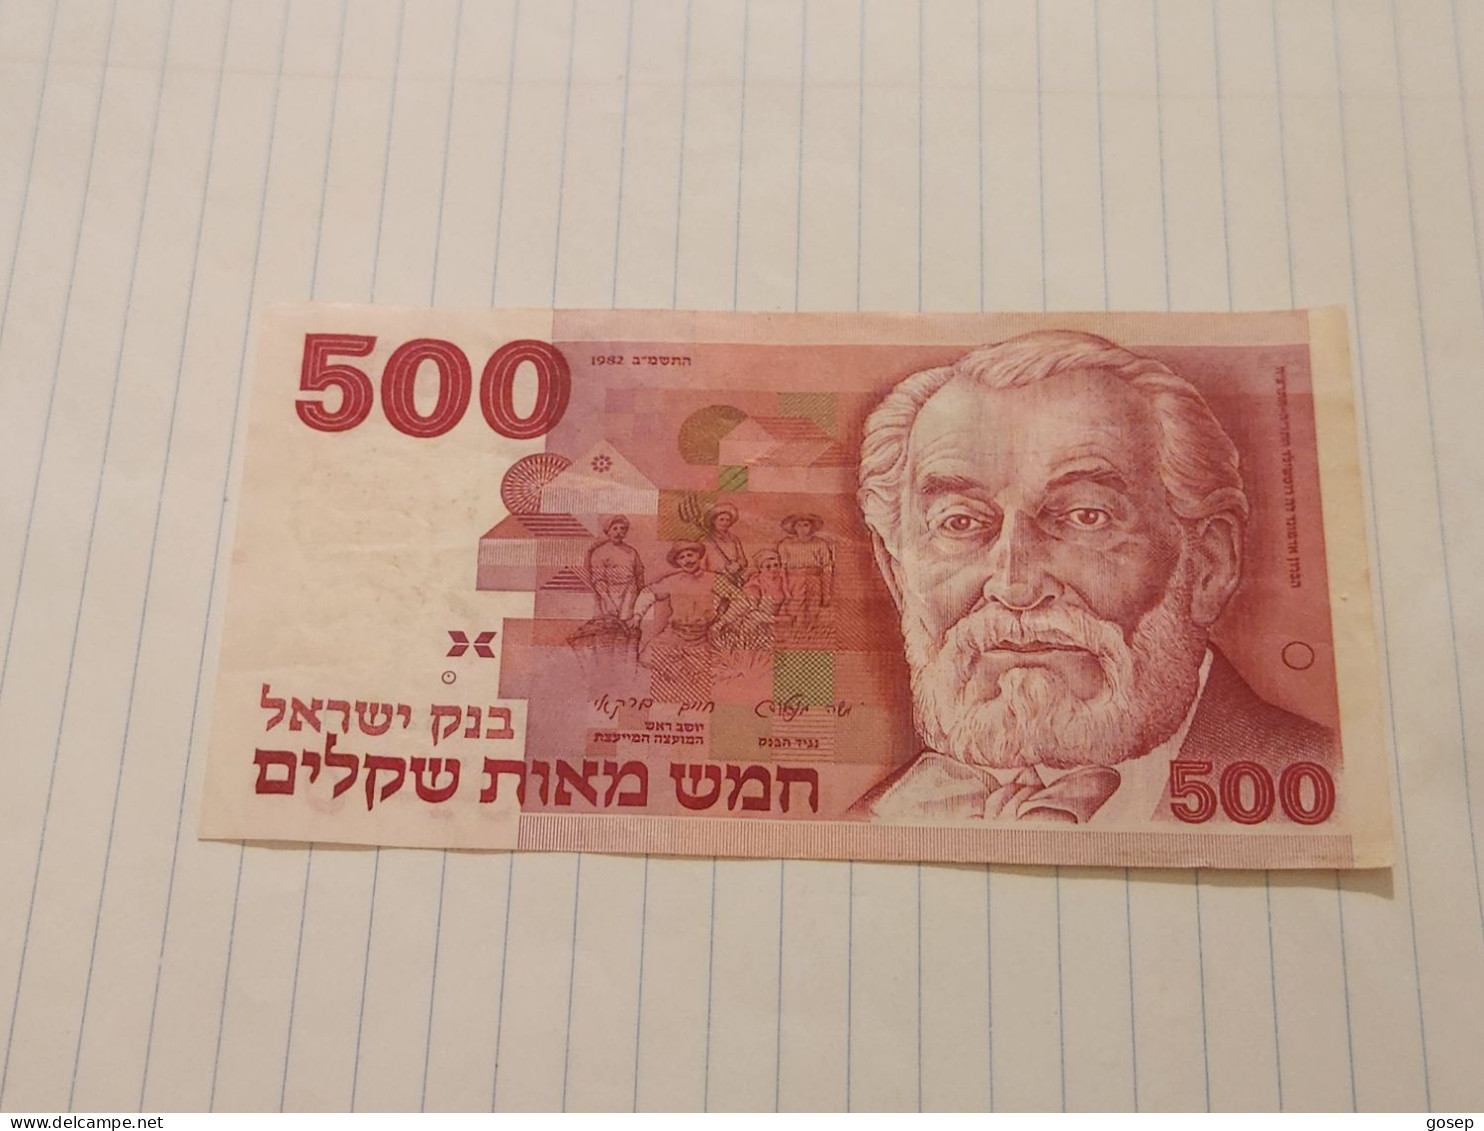 Israel-500 SHEQEL-HBARON EDMUND DE ROTHSCHILD-(1978-79)(460)(BLACK-NUMBER)-(0142542126)-Wrinkles Stain -bank Note - Israel